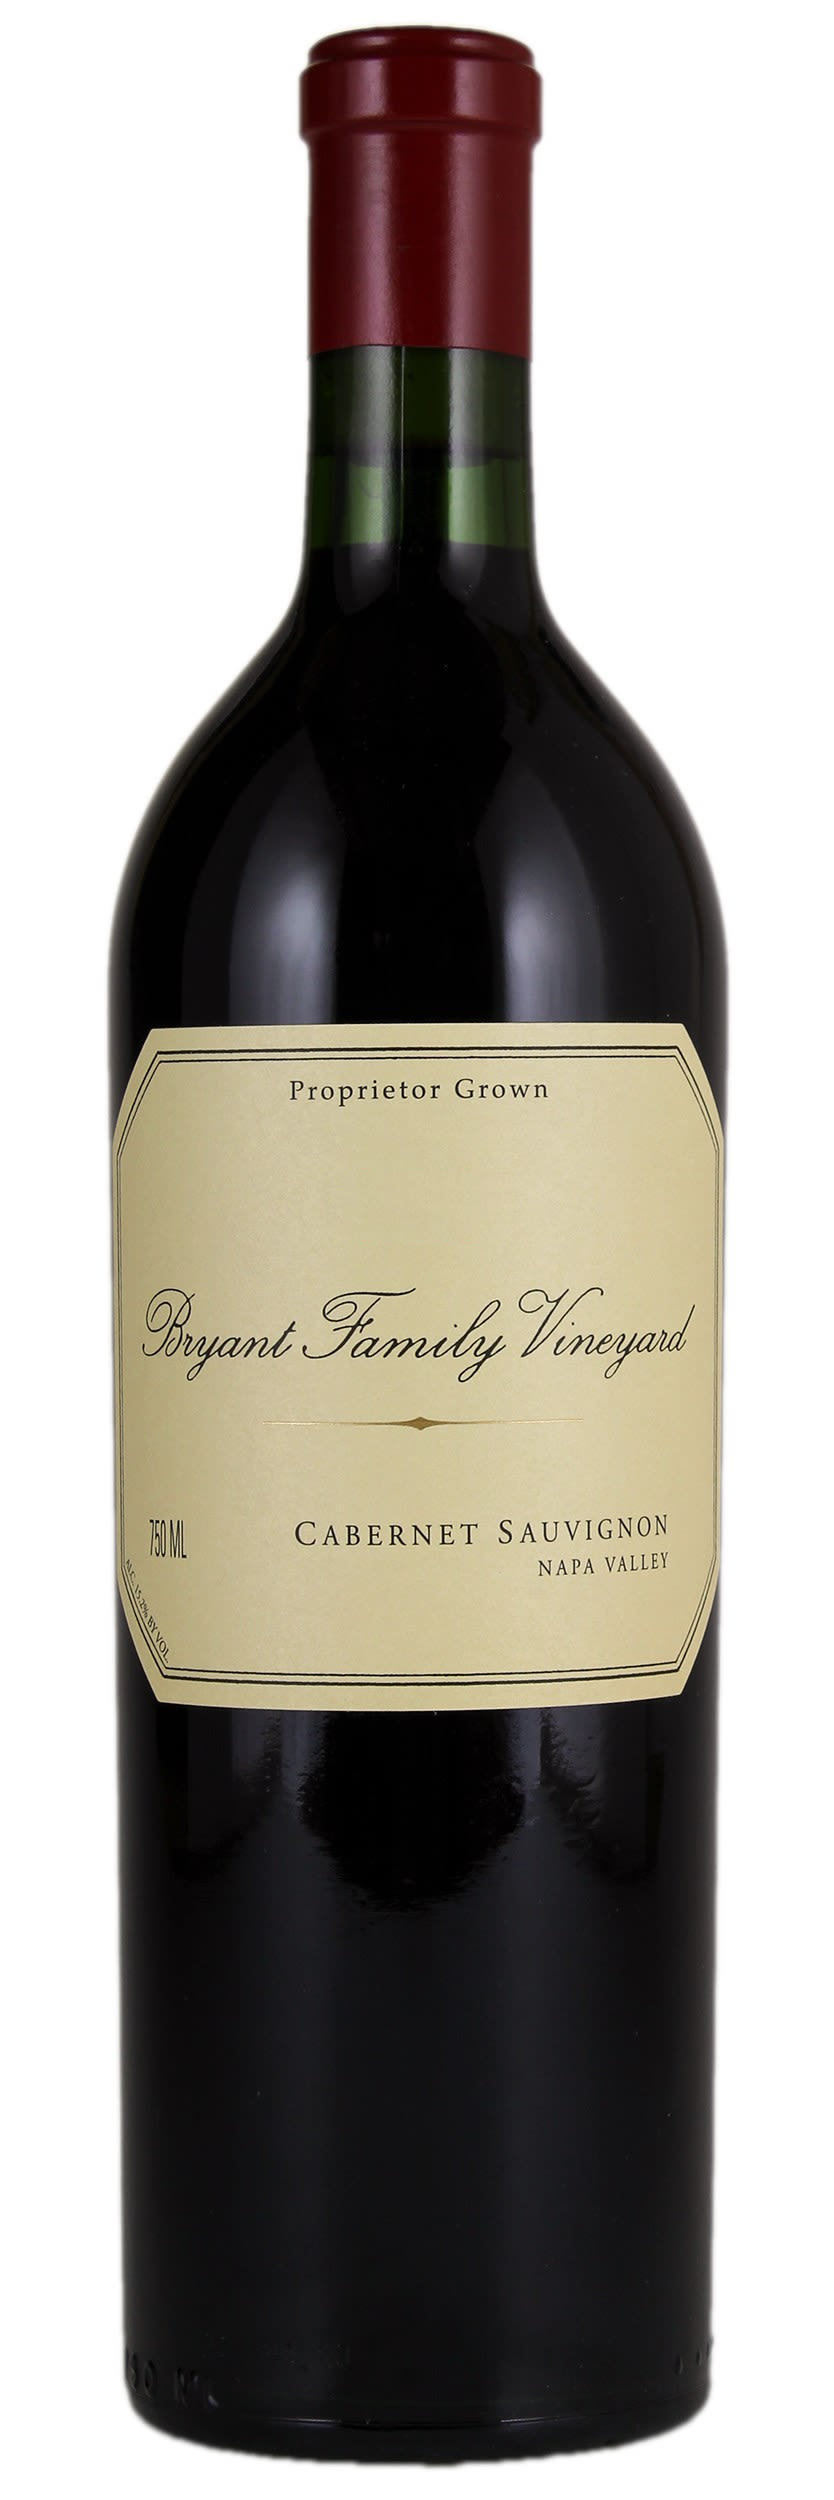 Bryant Family Vineyard – Cabernet Sauvignon 1998